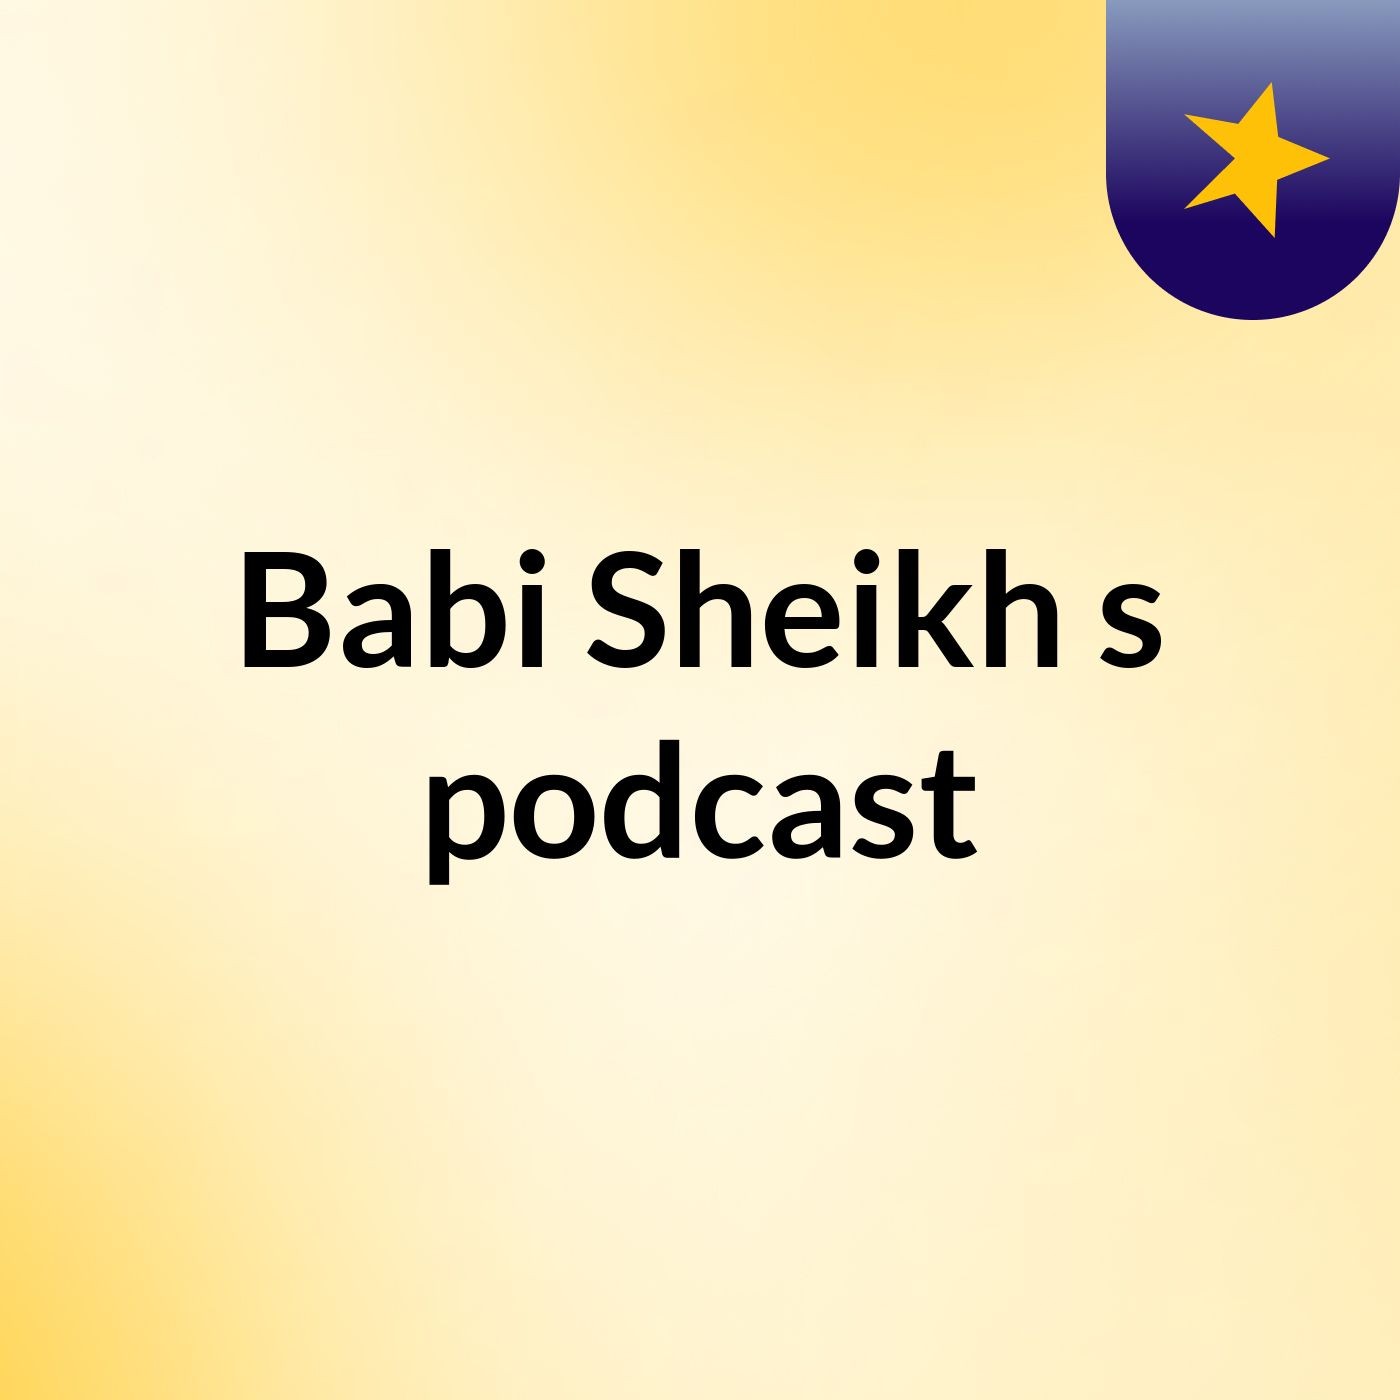 Babi Sheikh's podcast